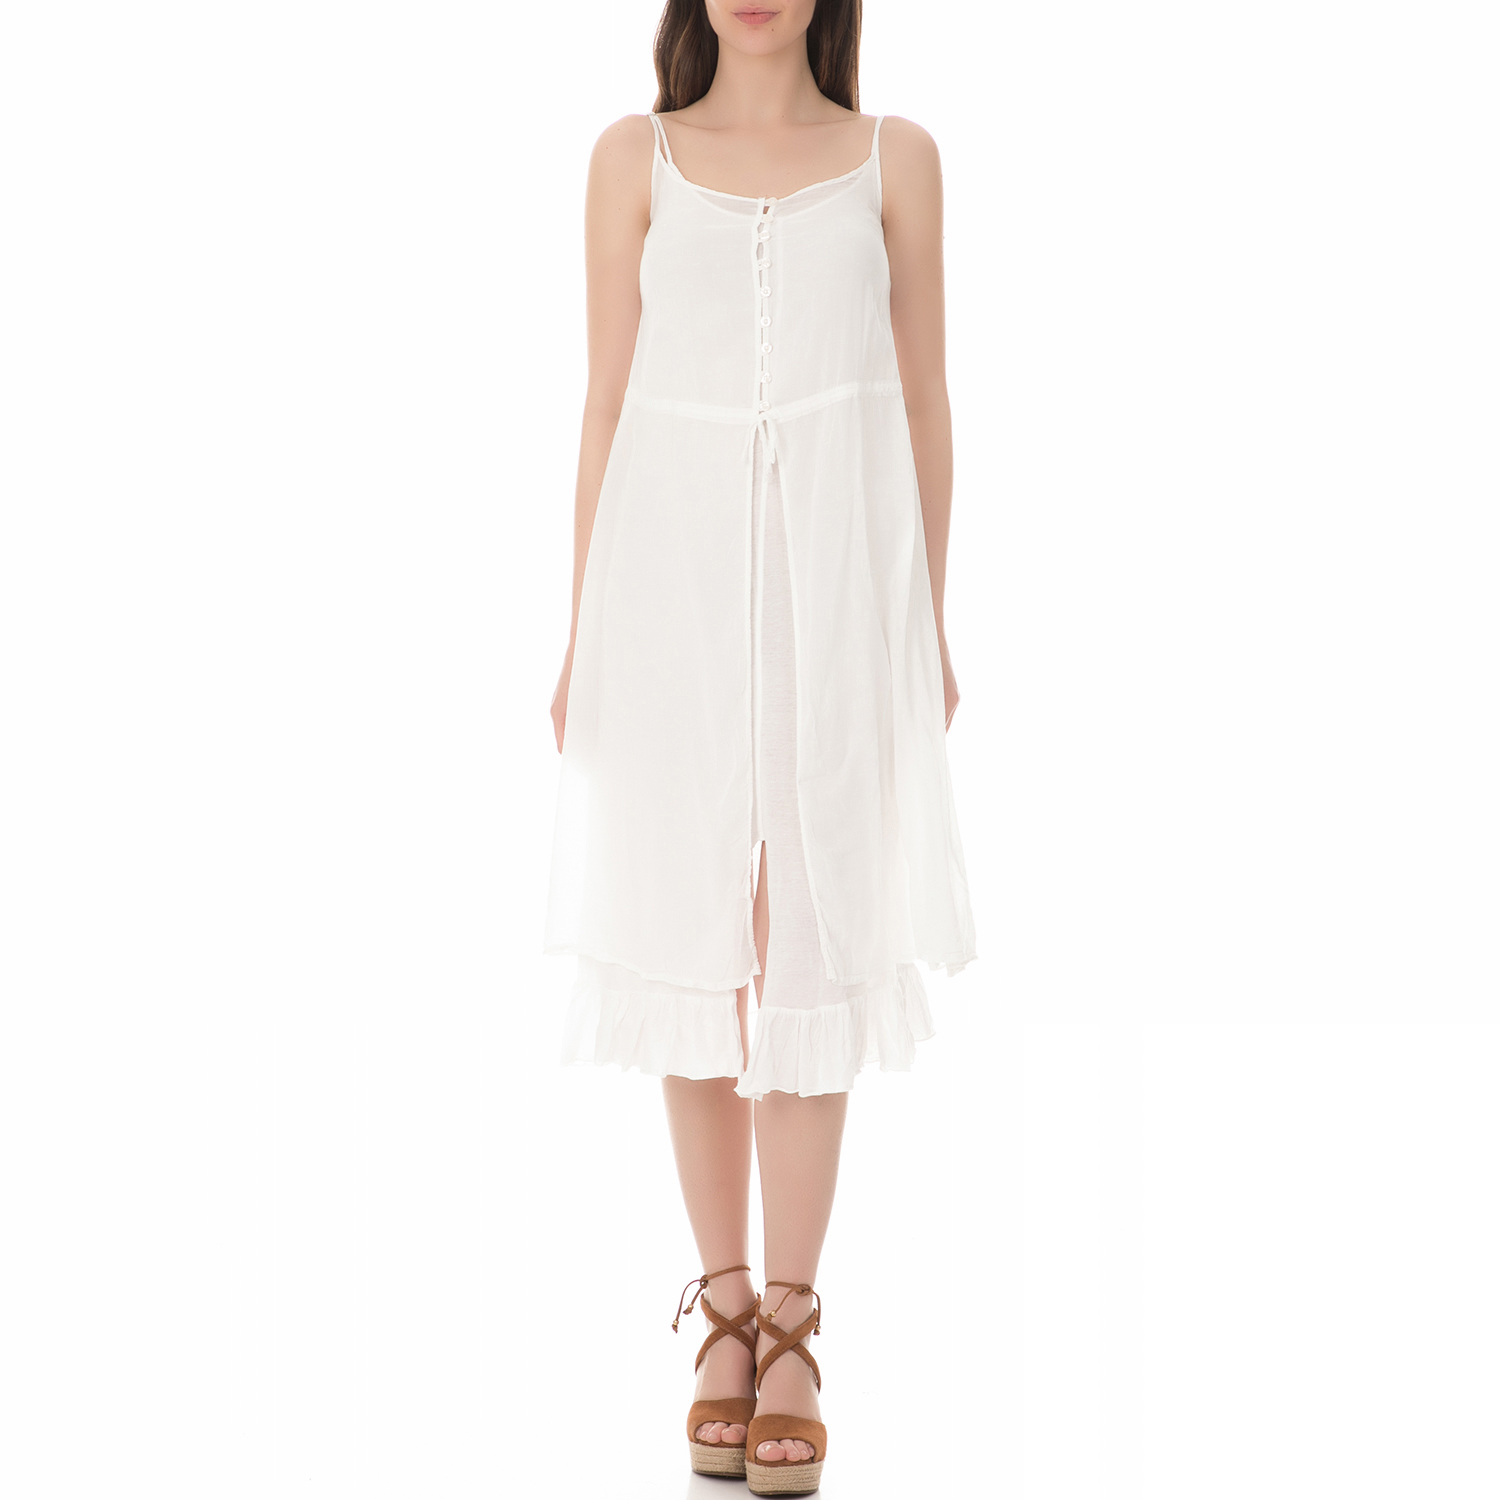 BRAEZ – Γυναικείο μίντι φόρεμα BRAEZ λευκό